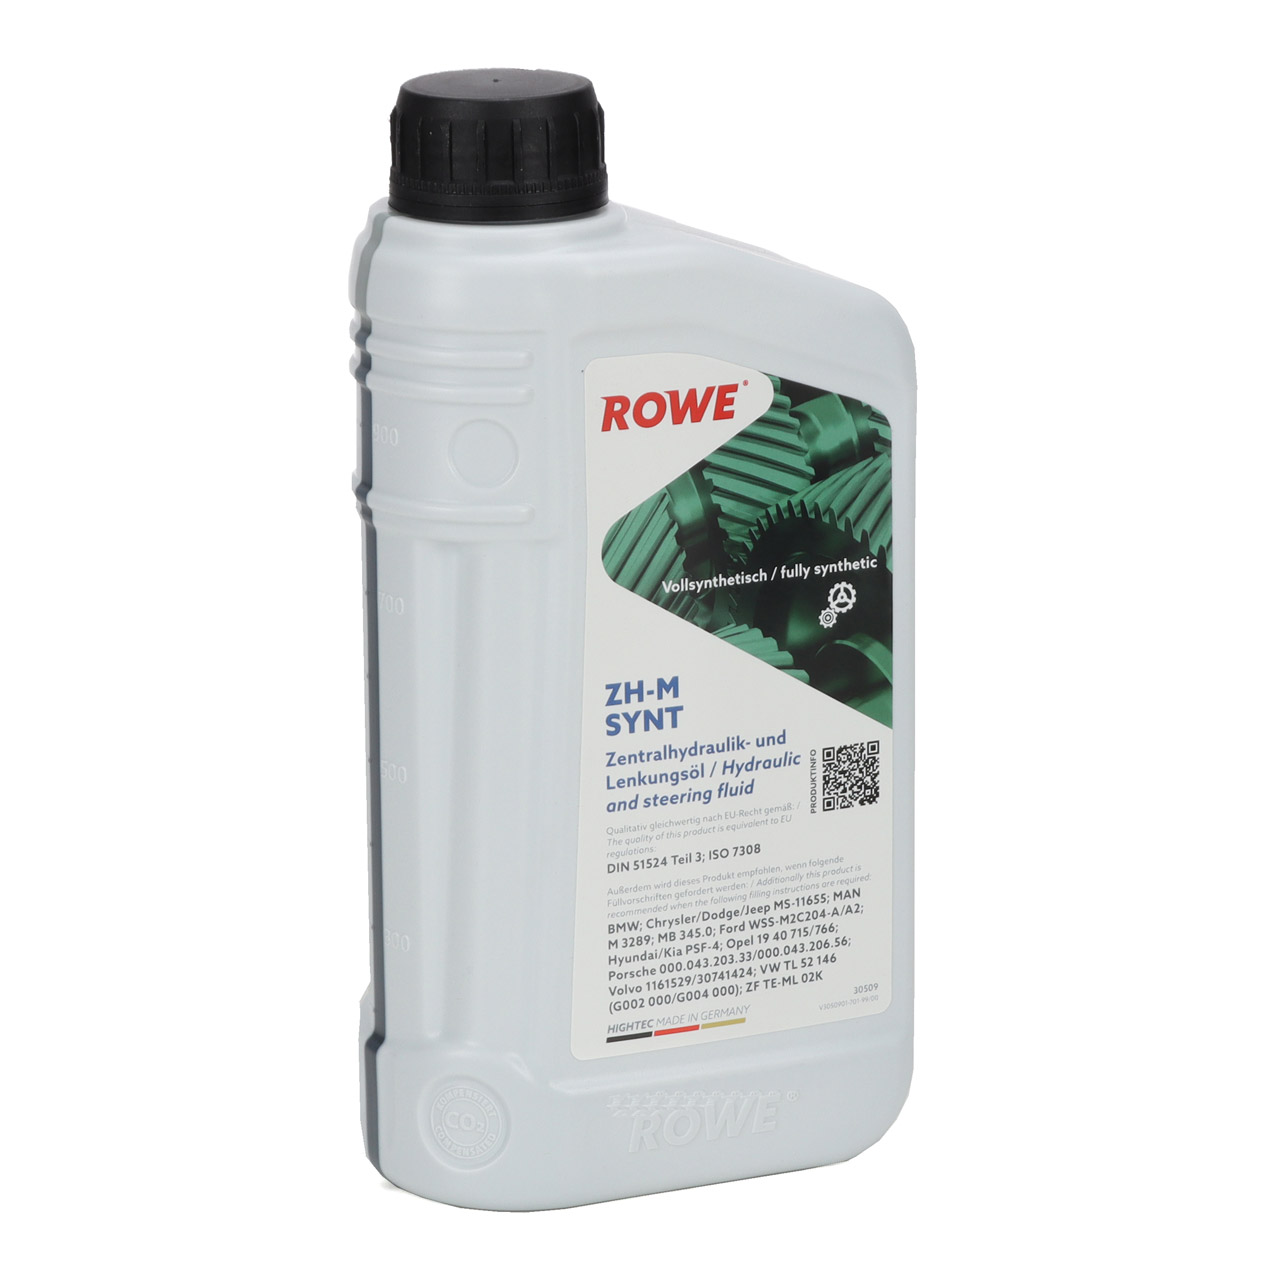 1L 1 Liter ROWE ZH-M SYNT Hochleistungs-Hydrauliköl Lenkungsöl DIN 51524 Teil 3 ISO 7308